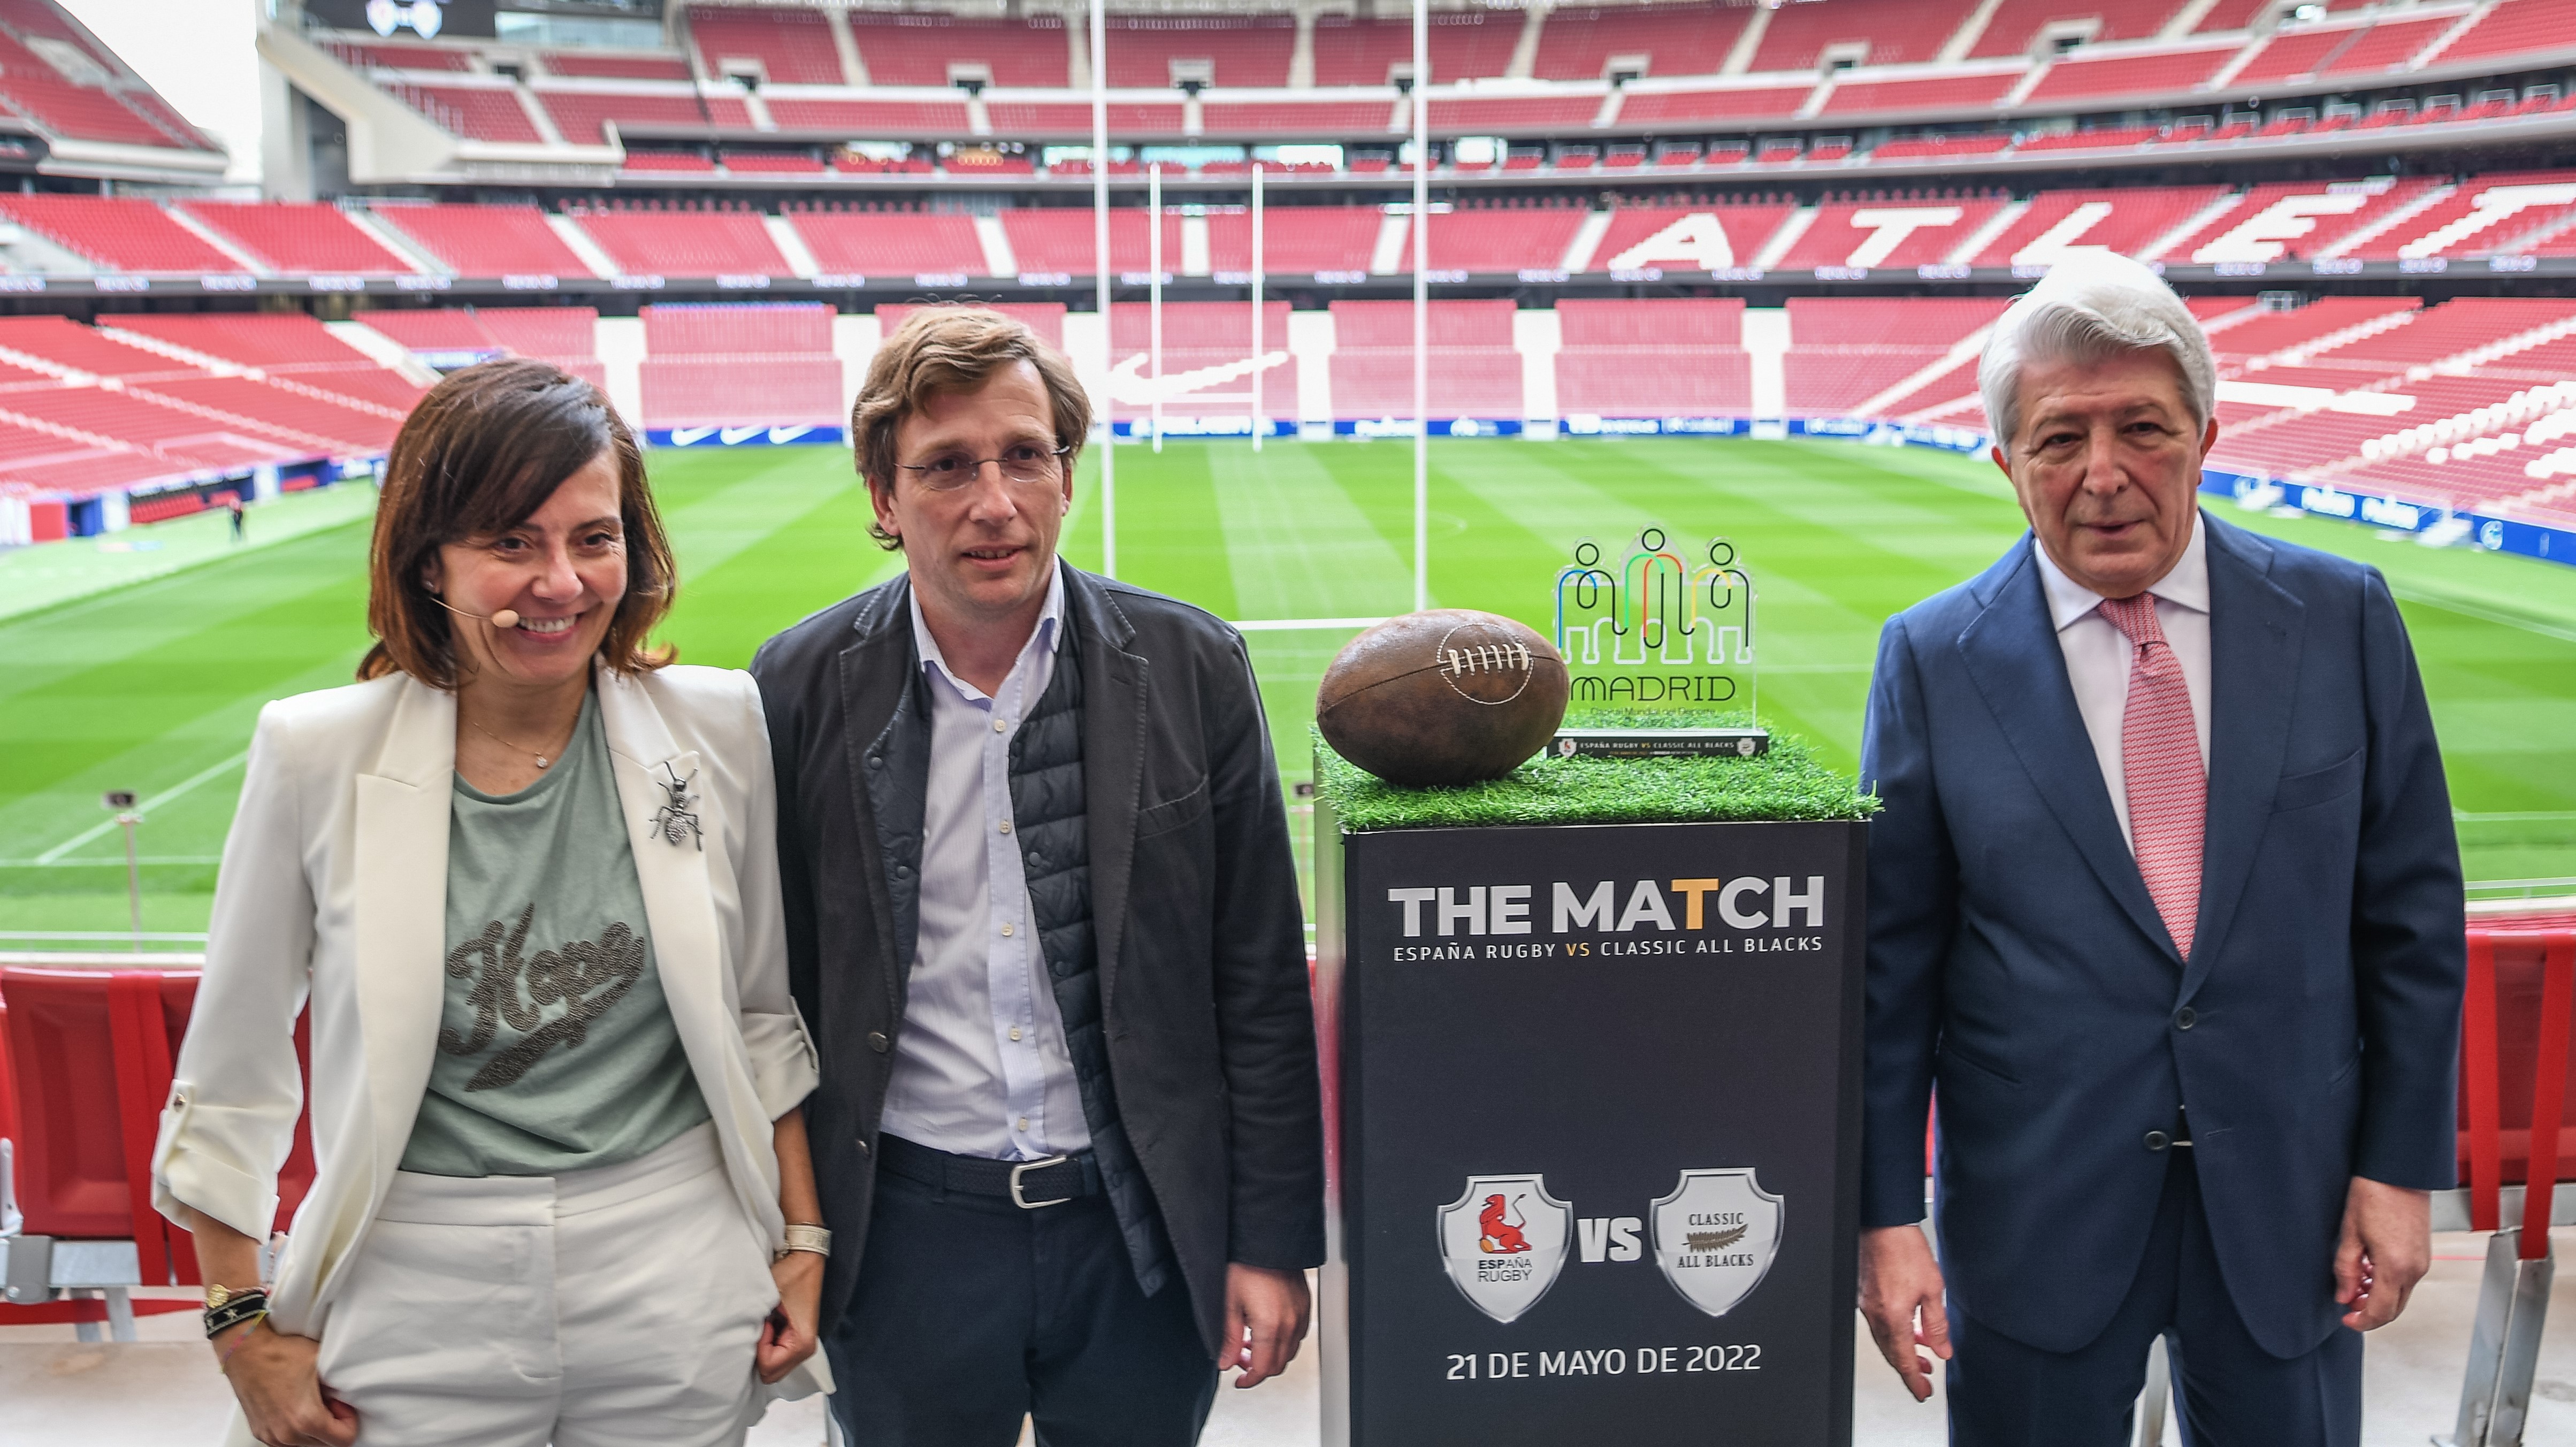 Singular WOD ficha como partner técnico del ‘The Match’ de rugby